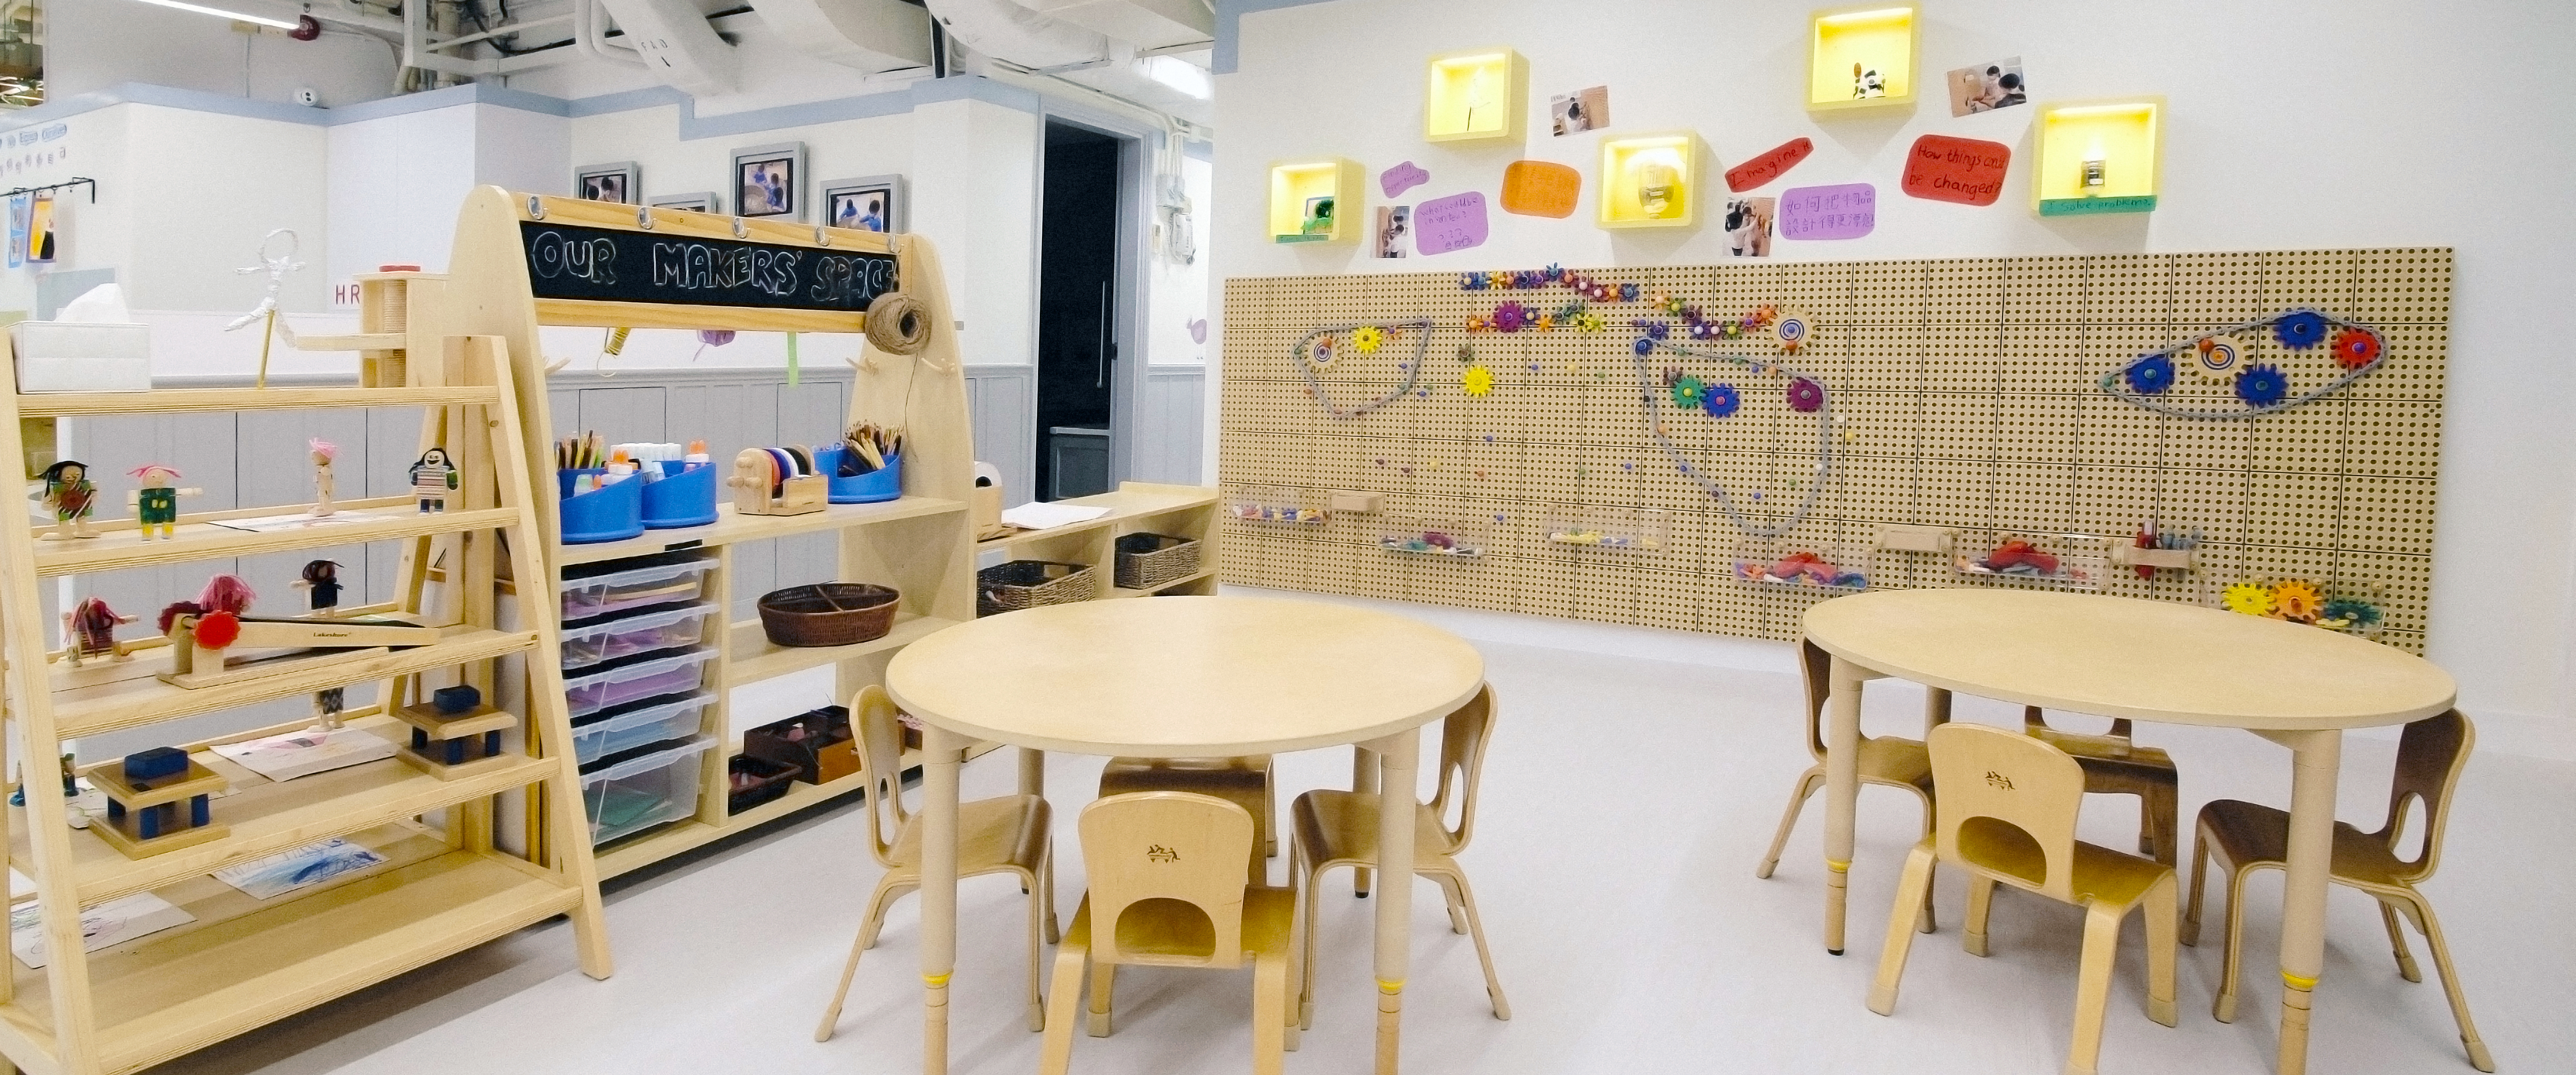 Harbour Green | Victoria Kindergarten, Nursery ,Infant & Toddler Programme